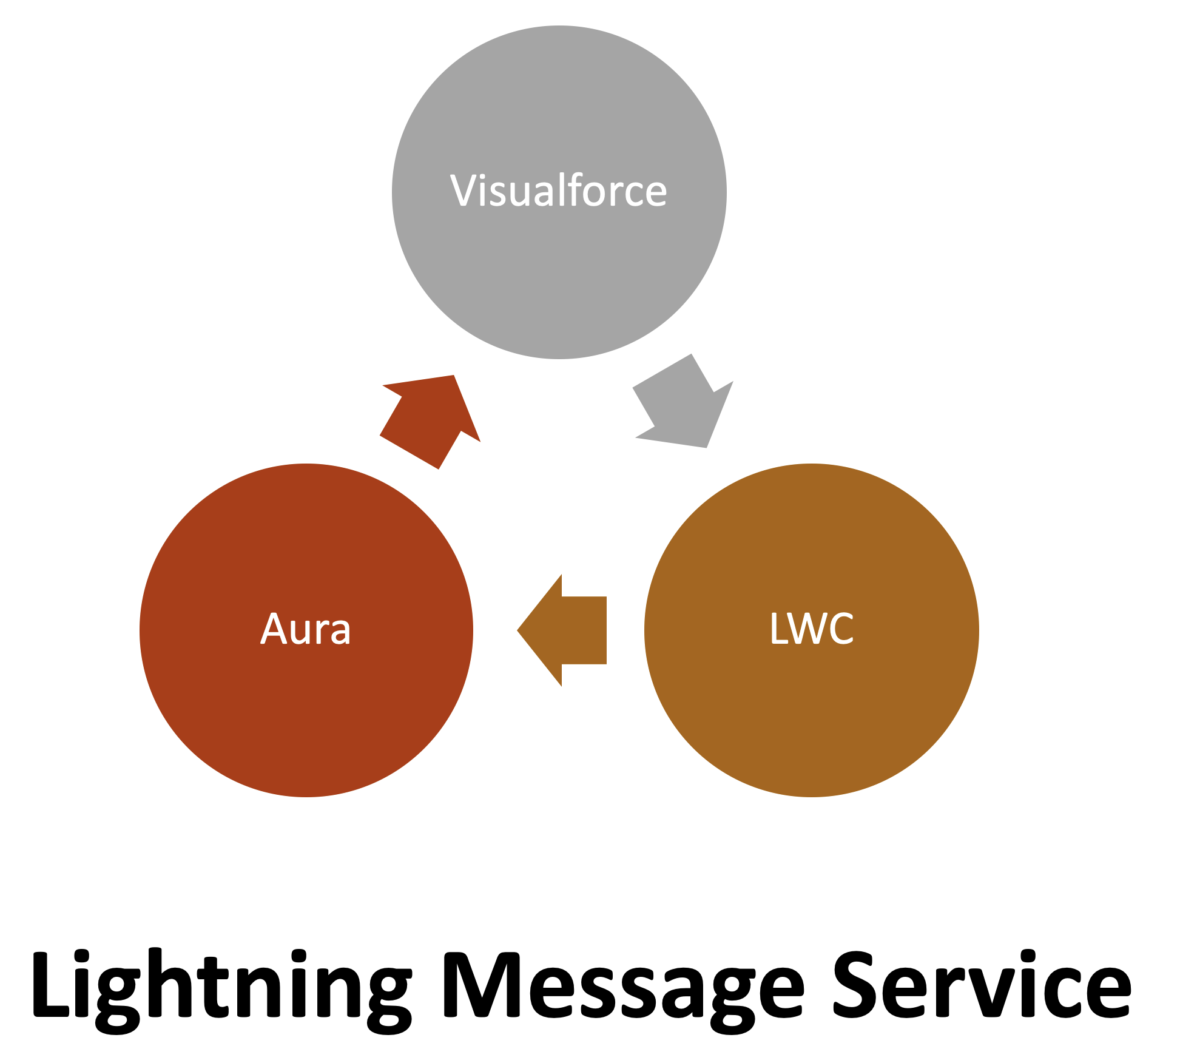 Salesforce Lightning Message Service